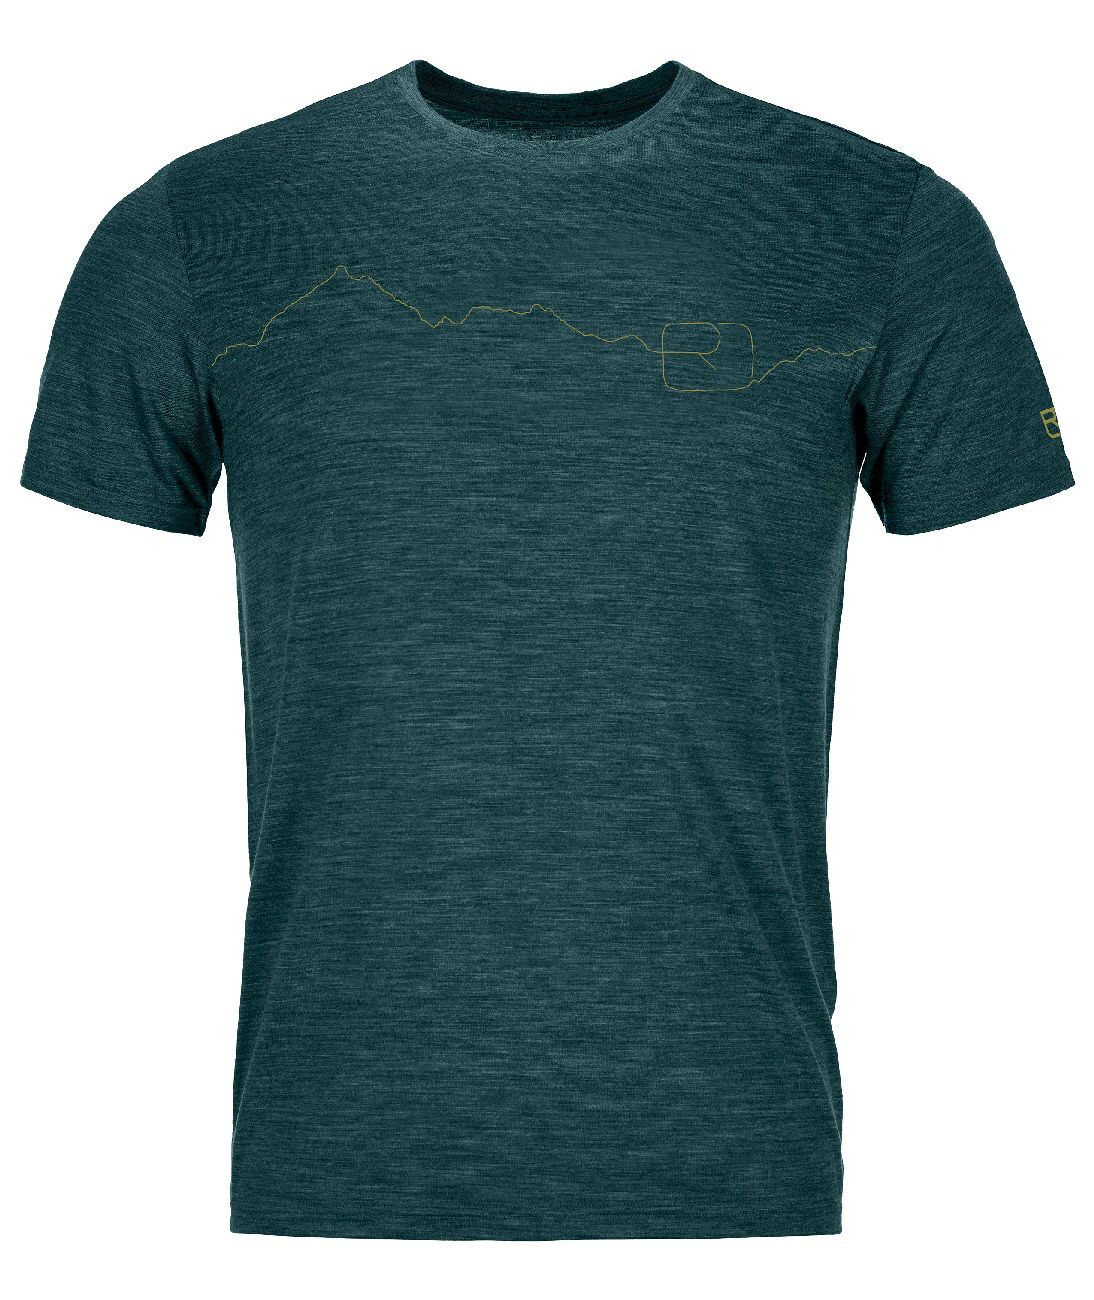 Ortovox 150 Cool Mountain TS - T-shirt - Men's